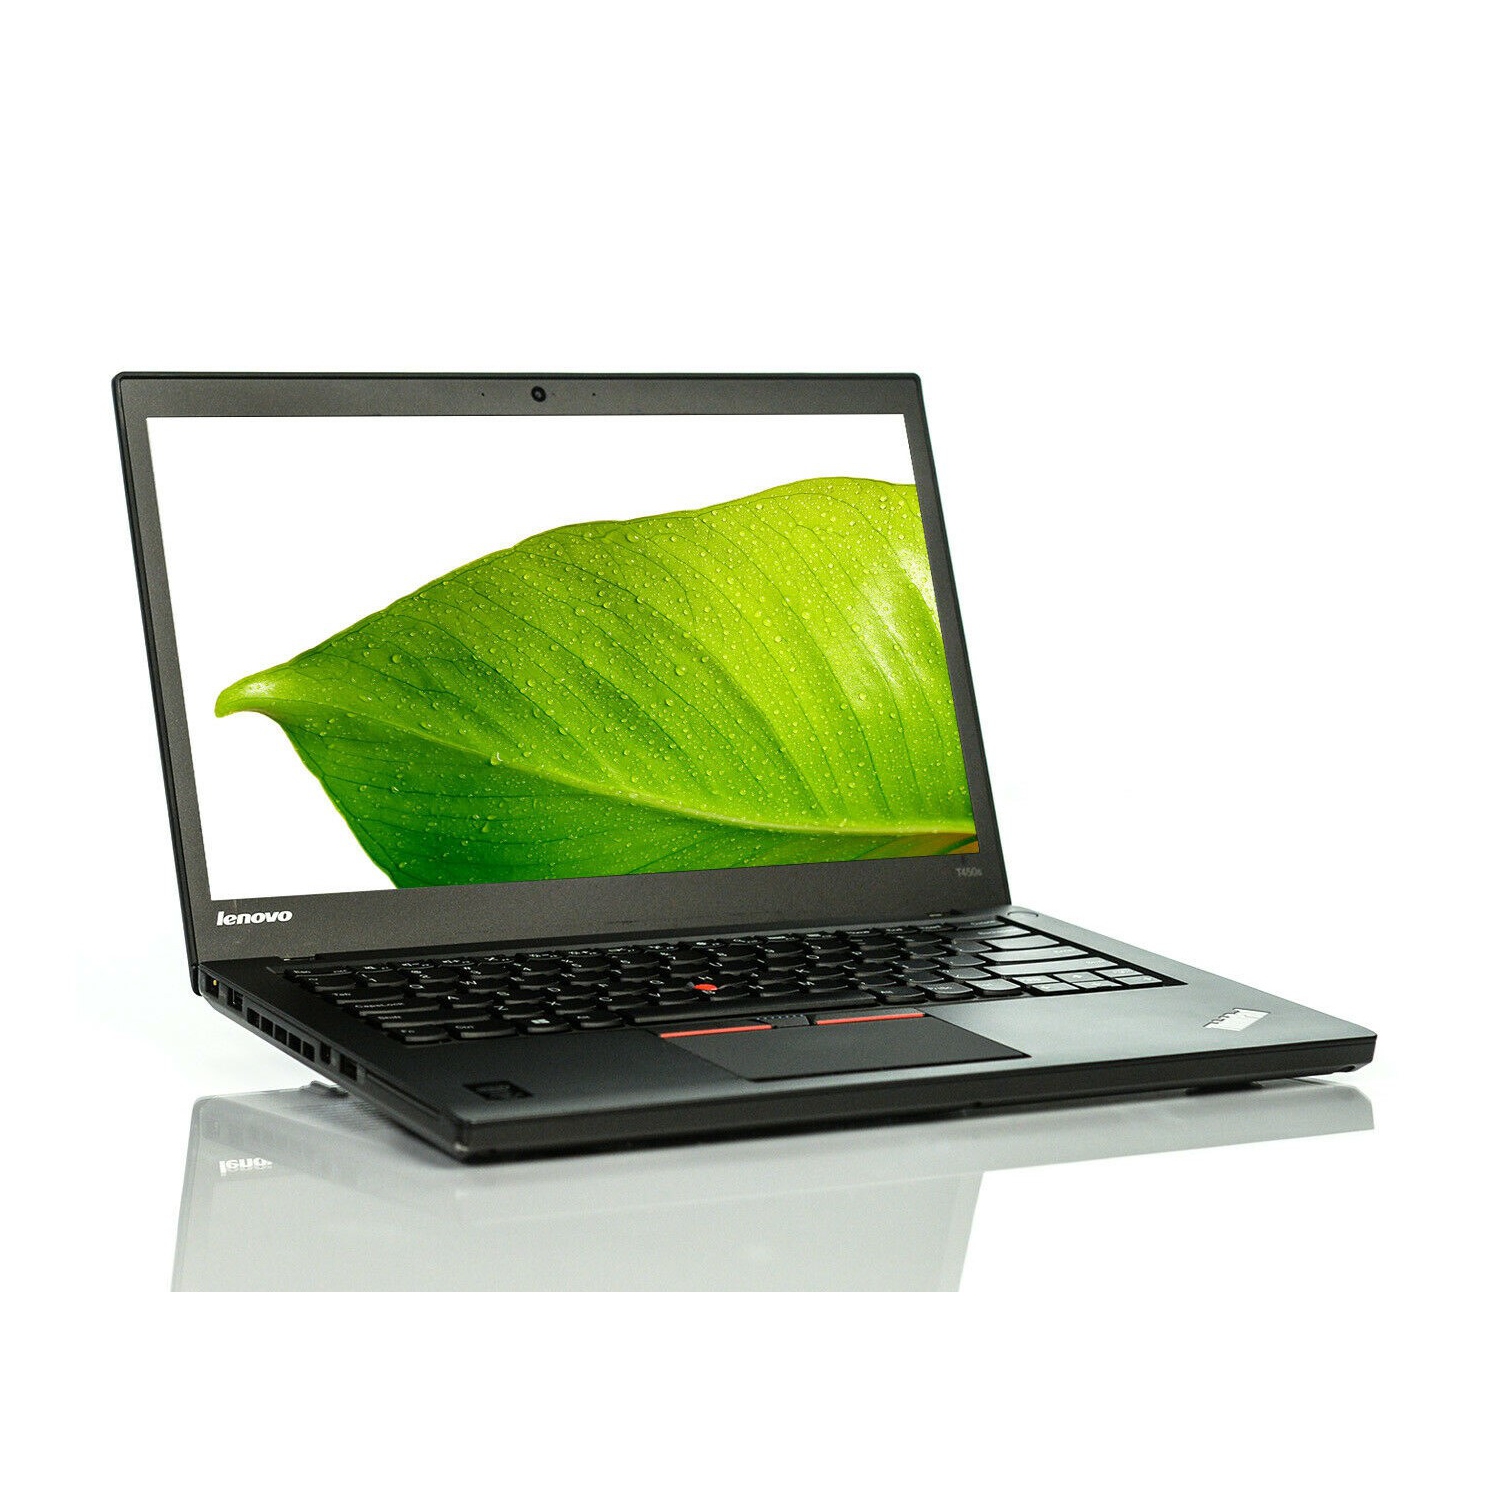 Refurbished (Good) - Lenovo ThinkPad T450s Laptop i5-5300U @2.30GHz 8GB 240GB SSD Win 10Pro